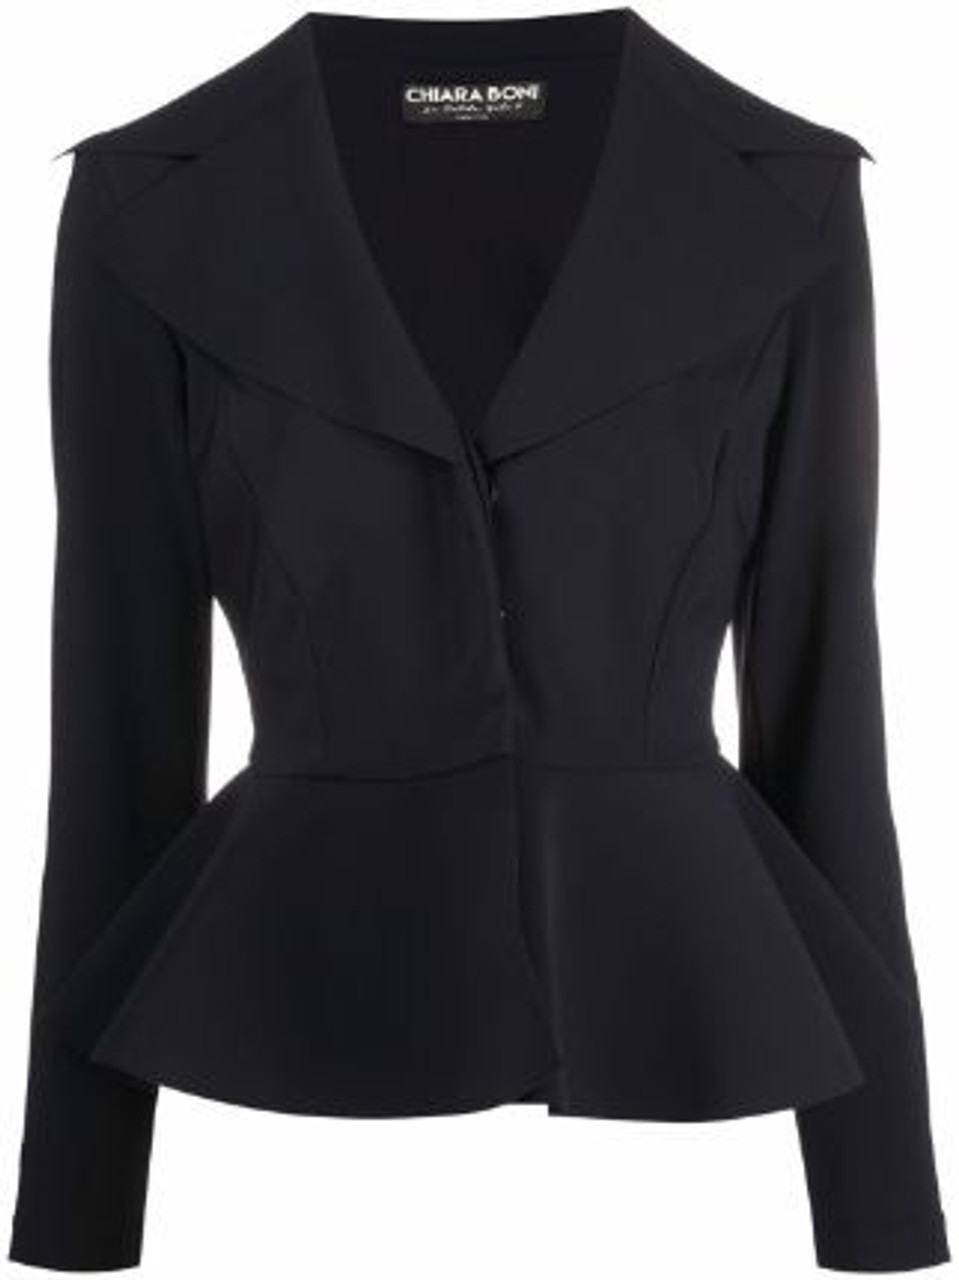 Chiara Boni La Petite Robe Britta Jacket in Black